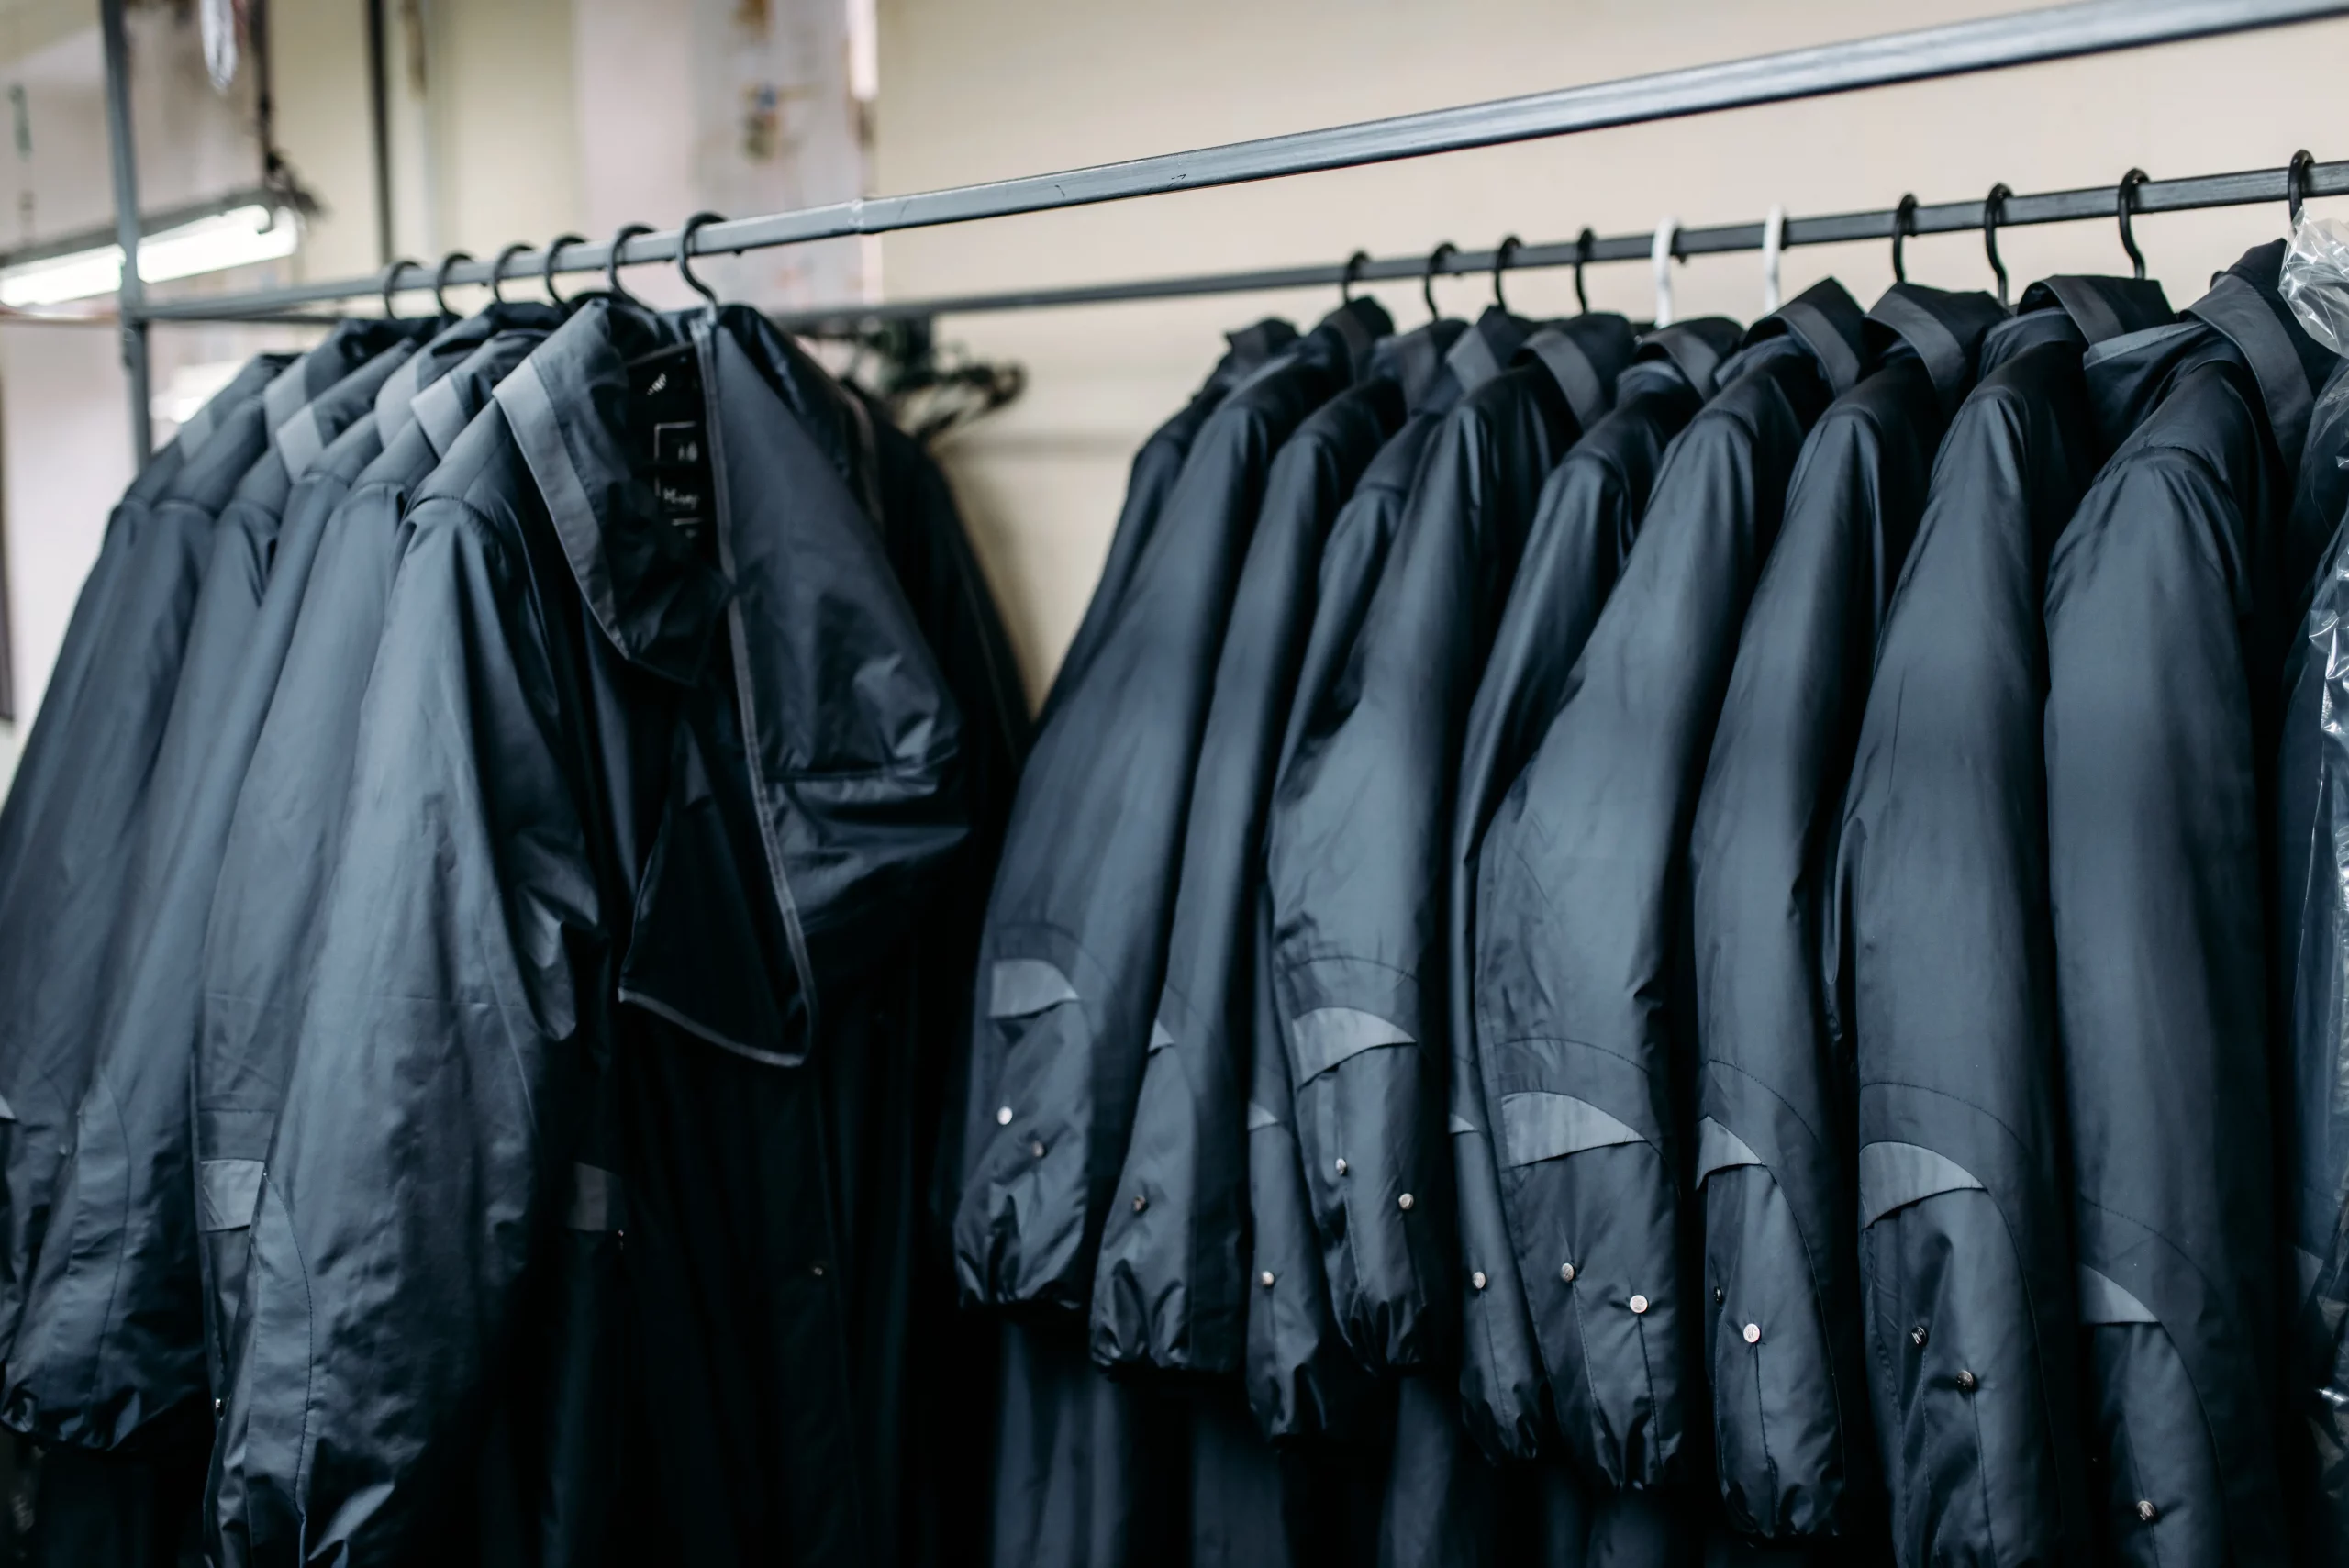 A row of black raincoats neatly hung on a rack, ready to shield against the rain.